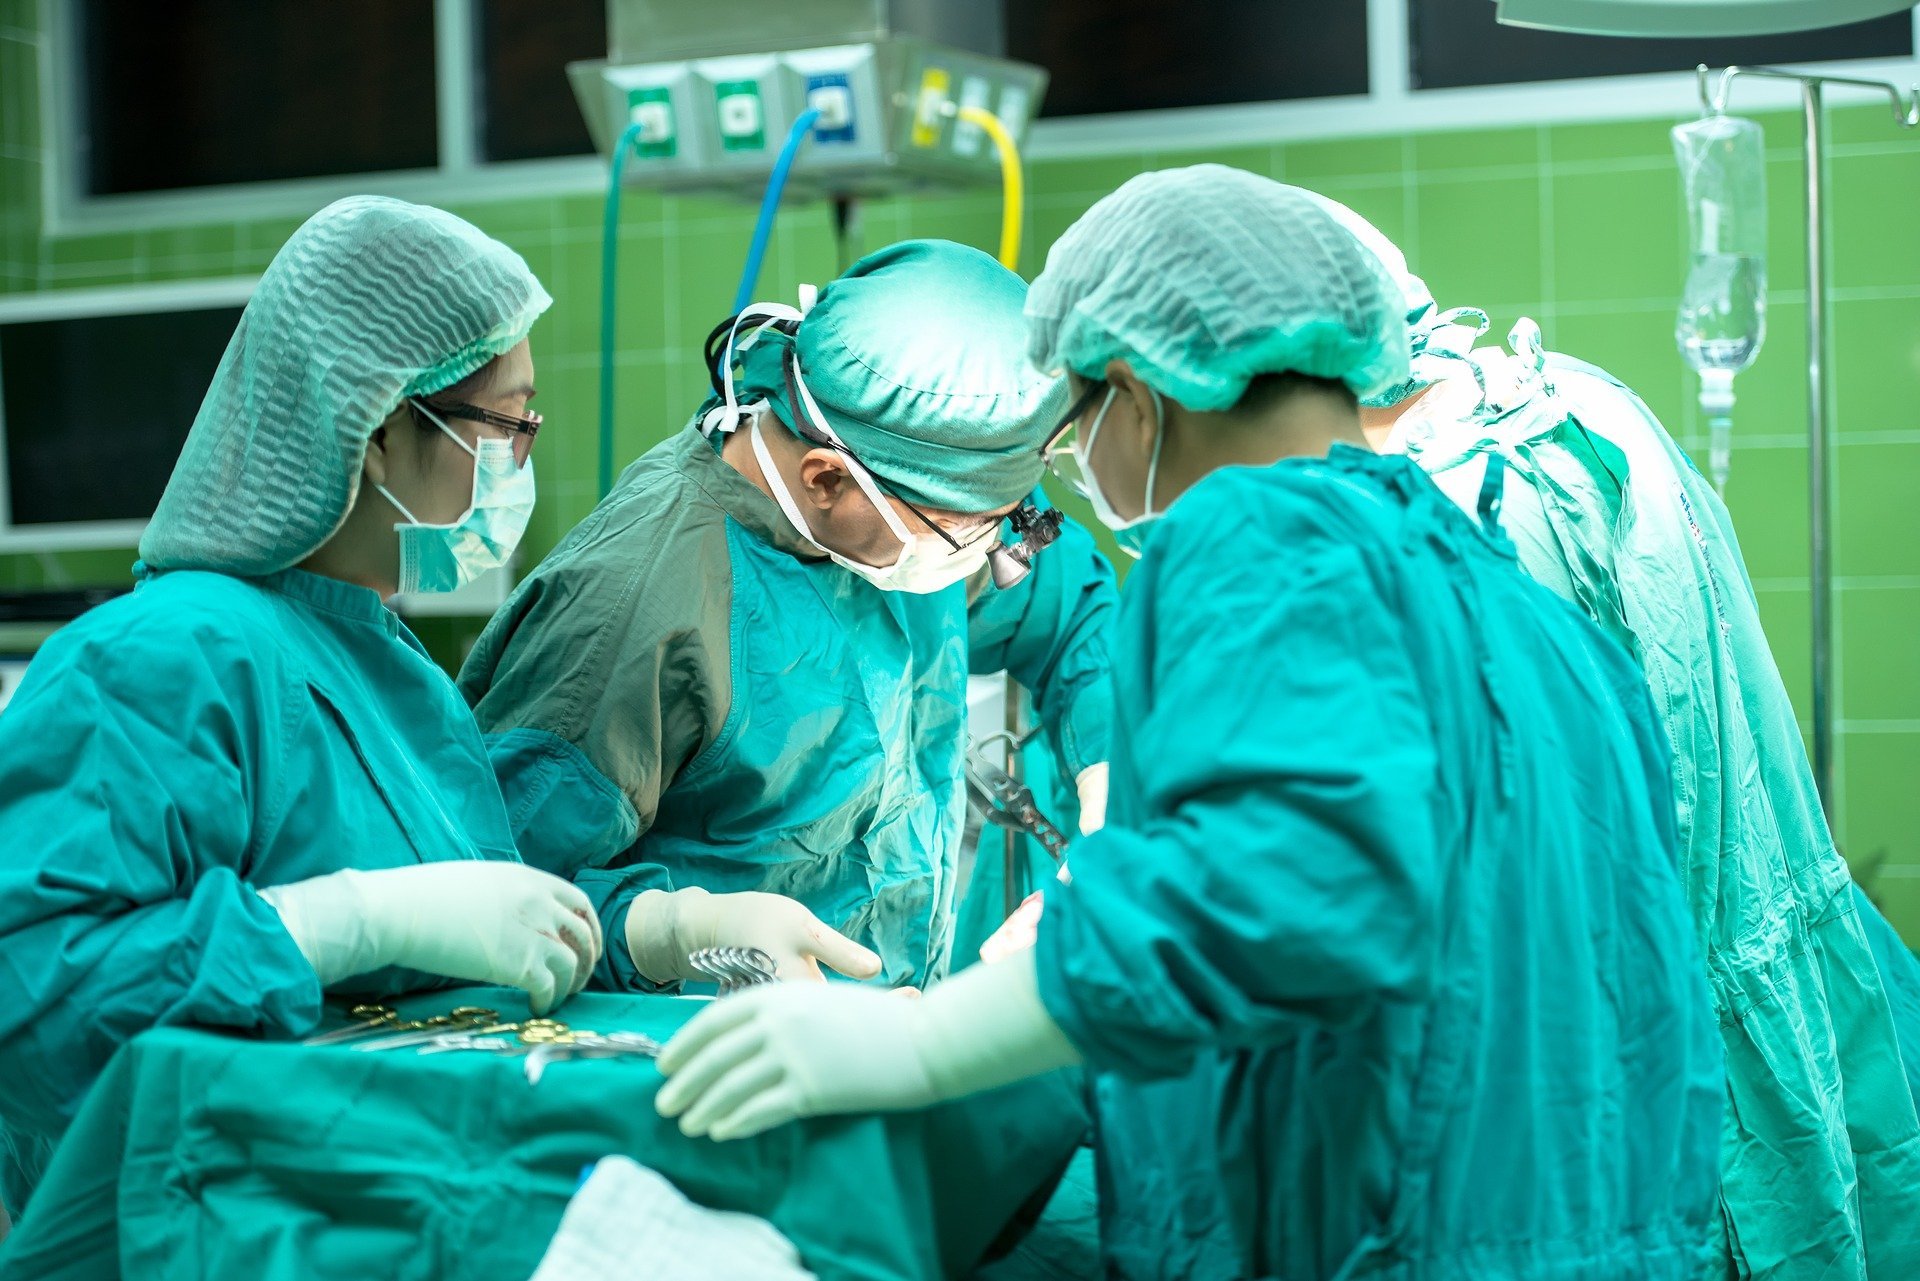 Doctors dressed in smocks performing surgery. | Source: Pixabay/Sasin Tipchai 